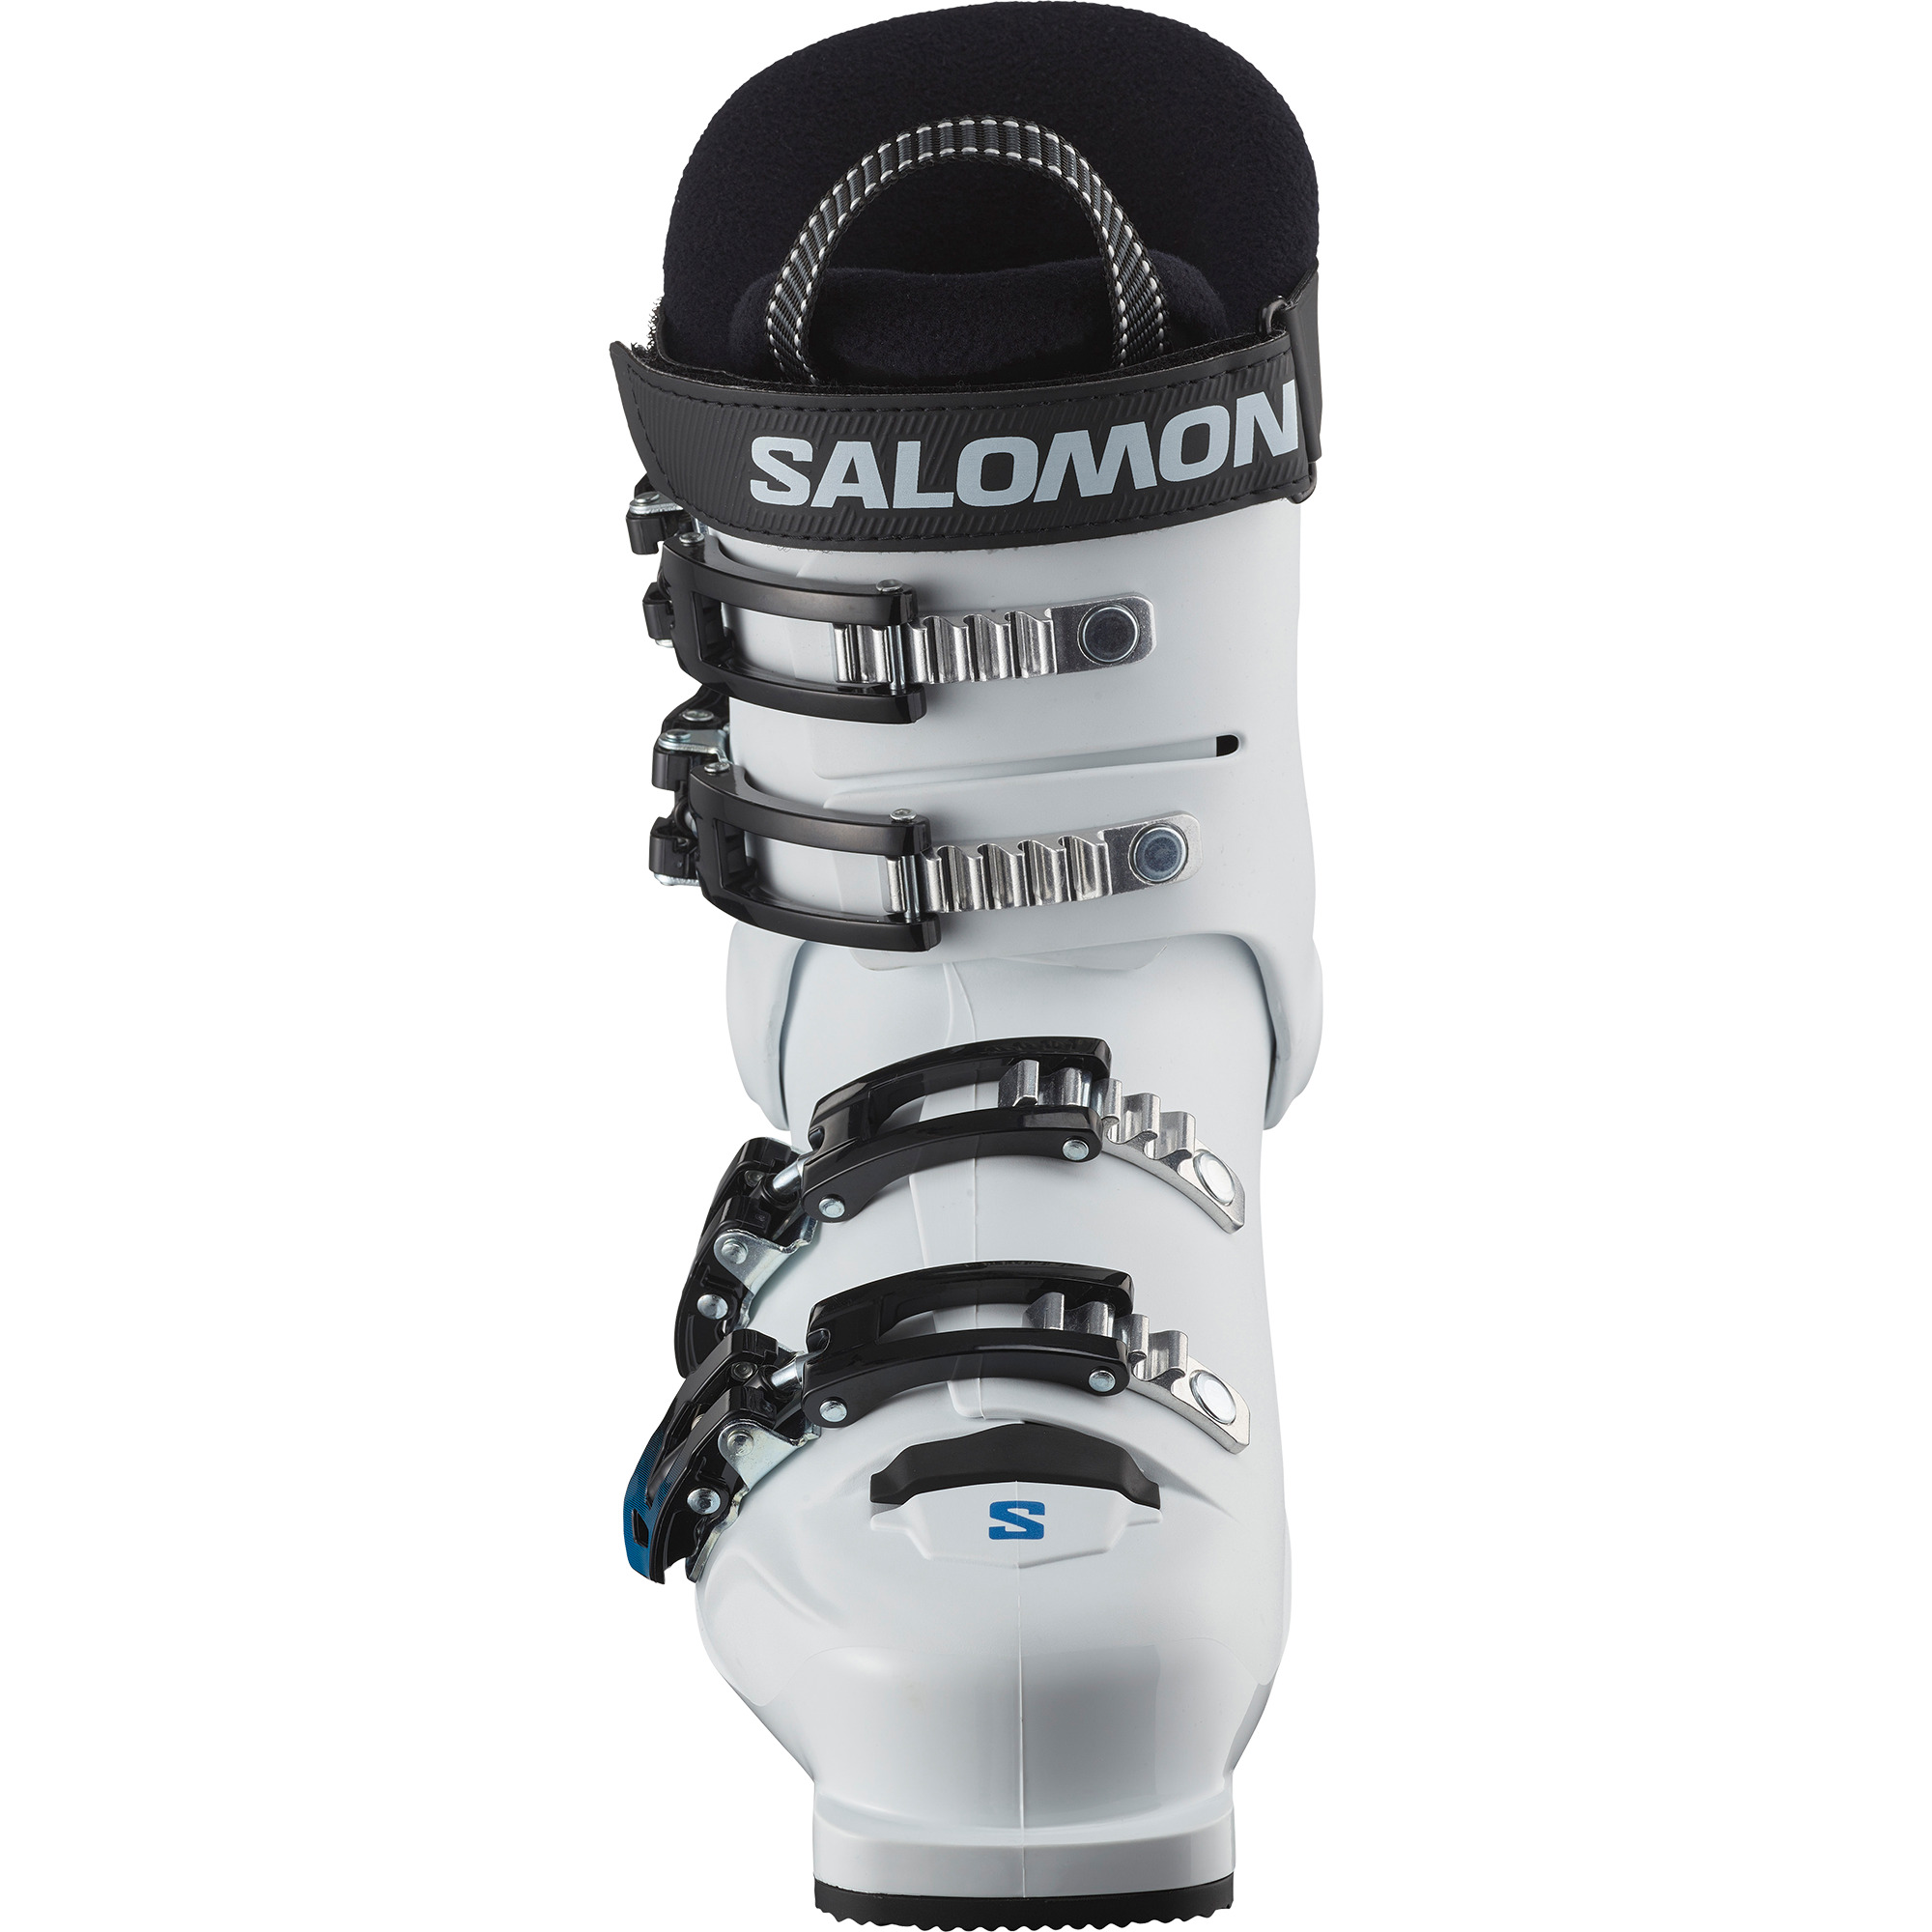 Salomon S/Max 60T L